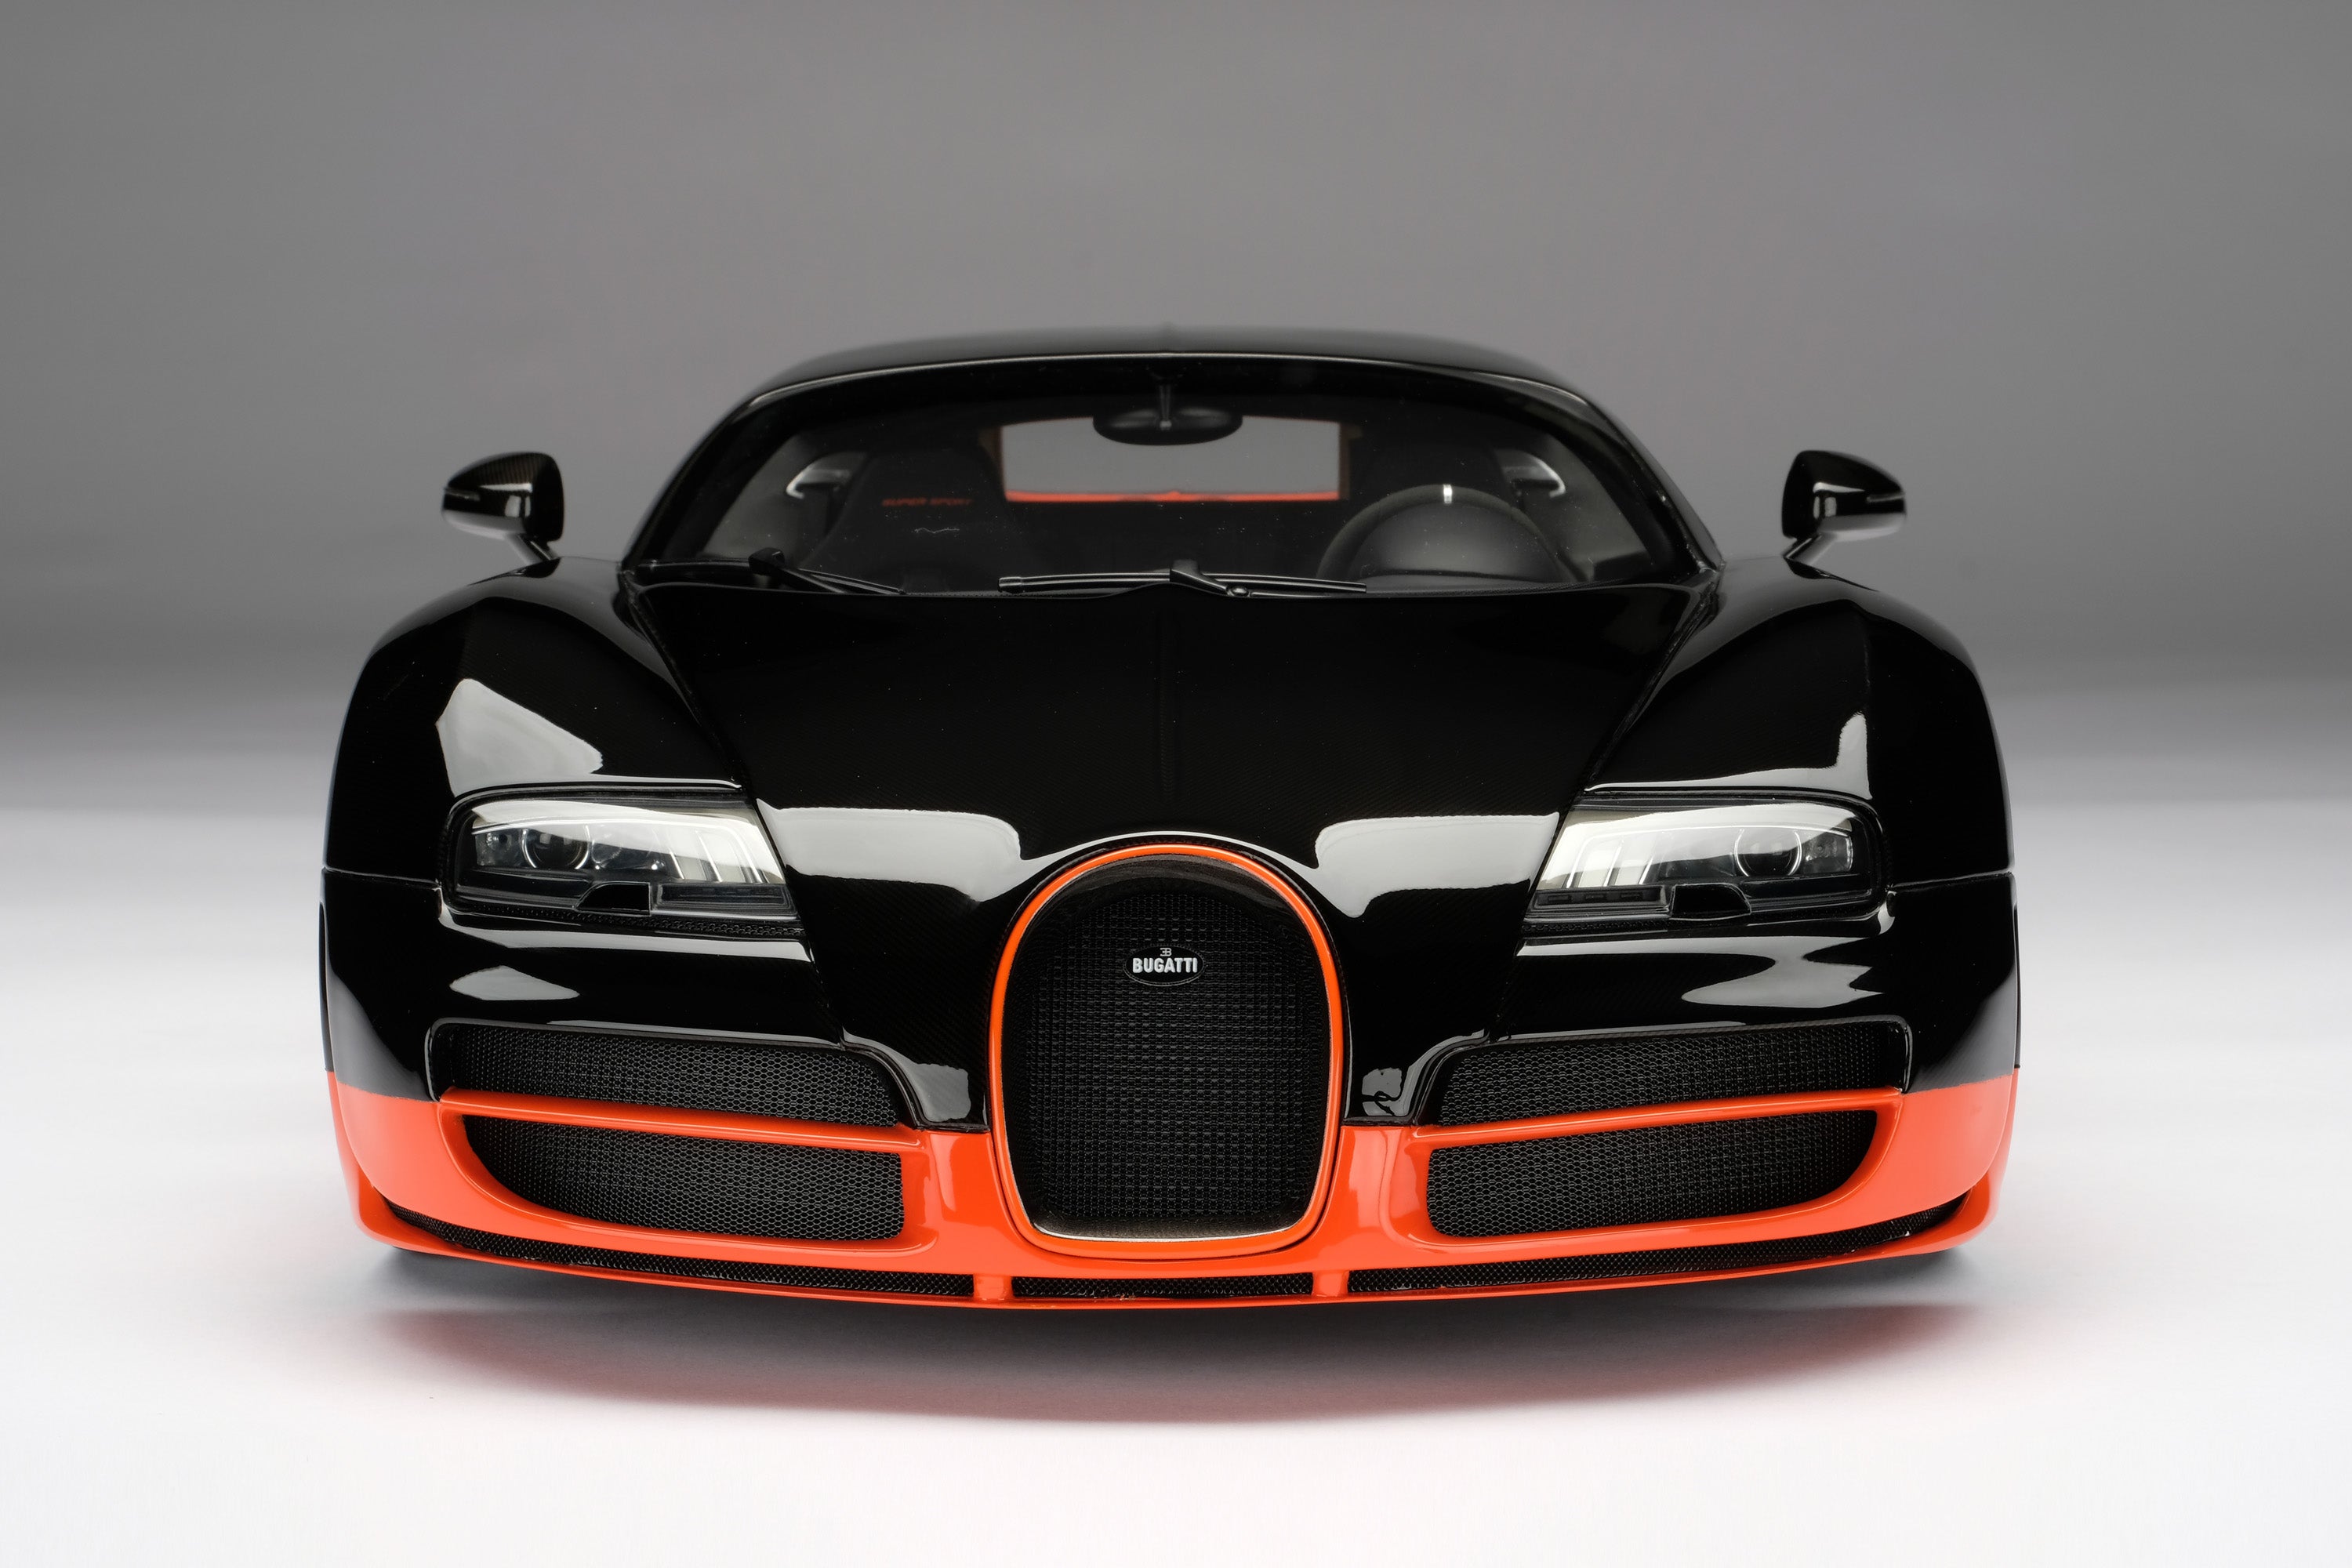 Bugatti Veyron Super Sport Wallpapers